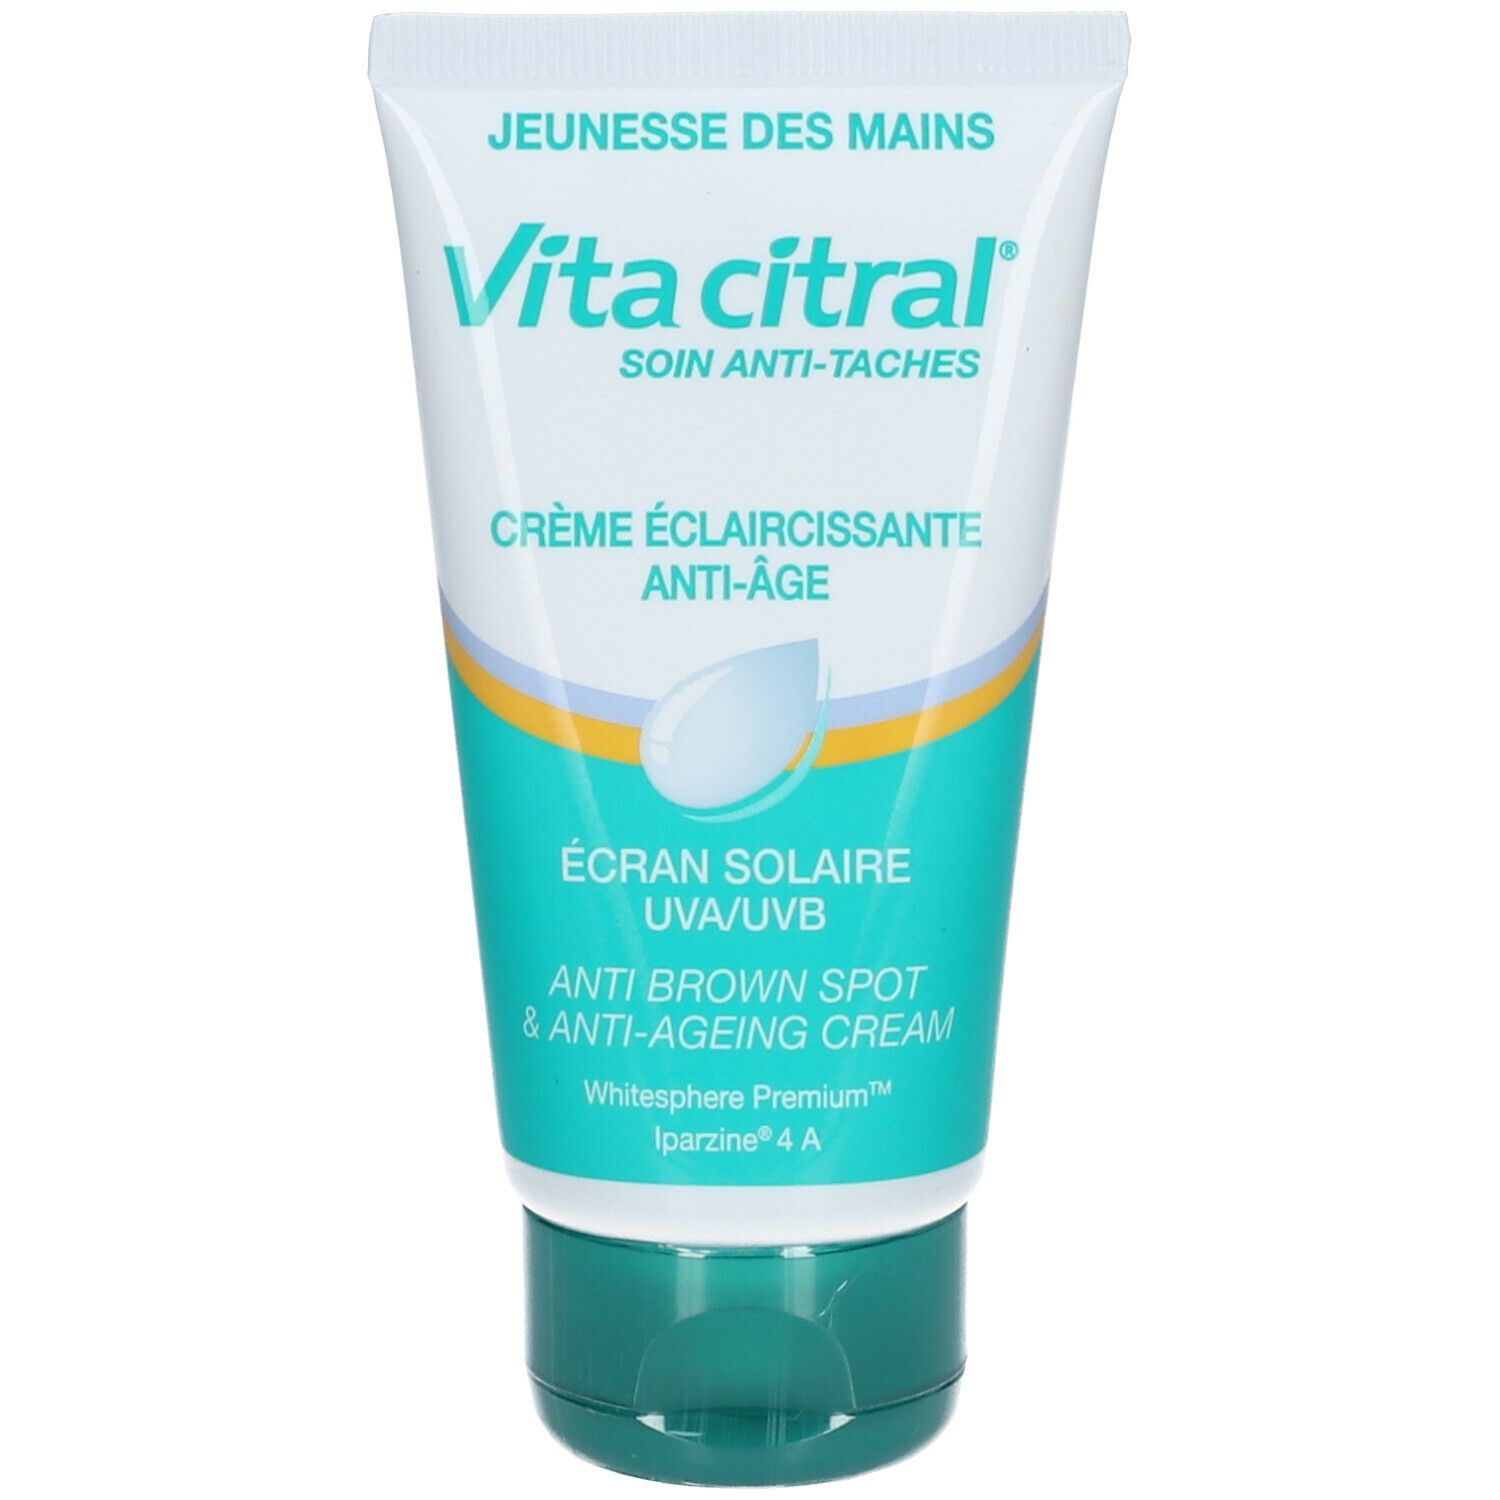 Vita Citral® Soin Anti Taches Crème Éclaircissante